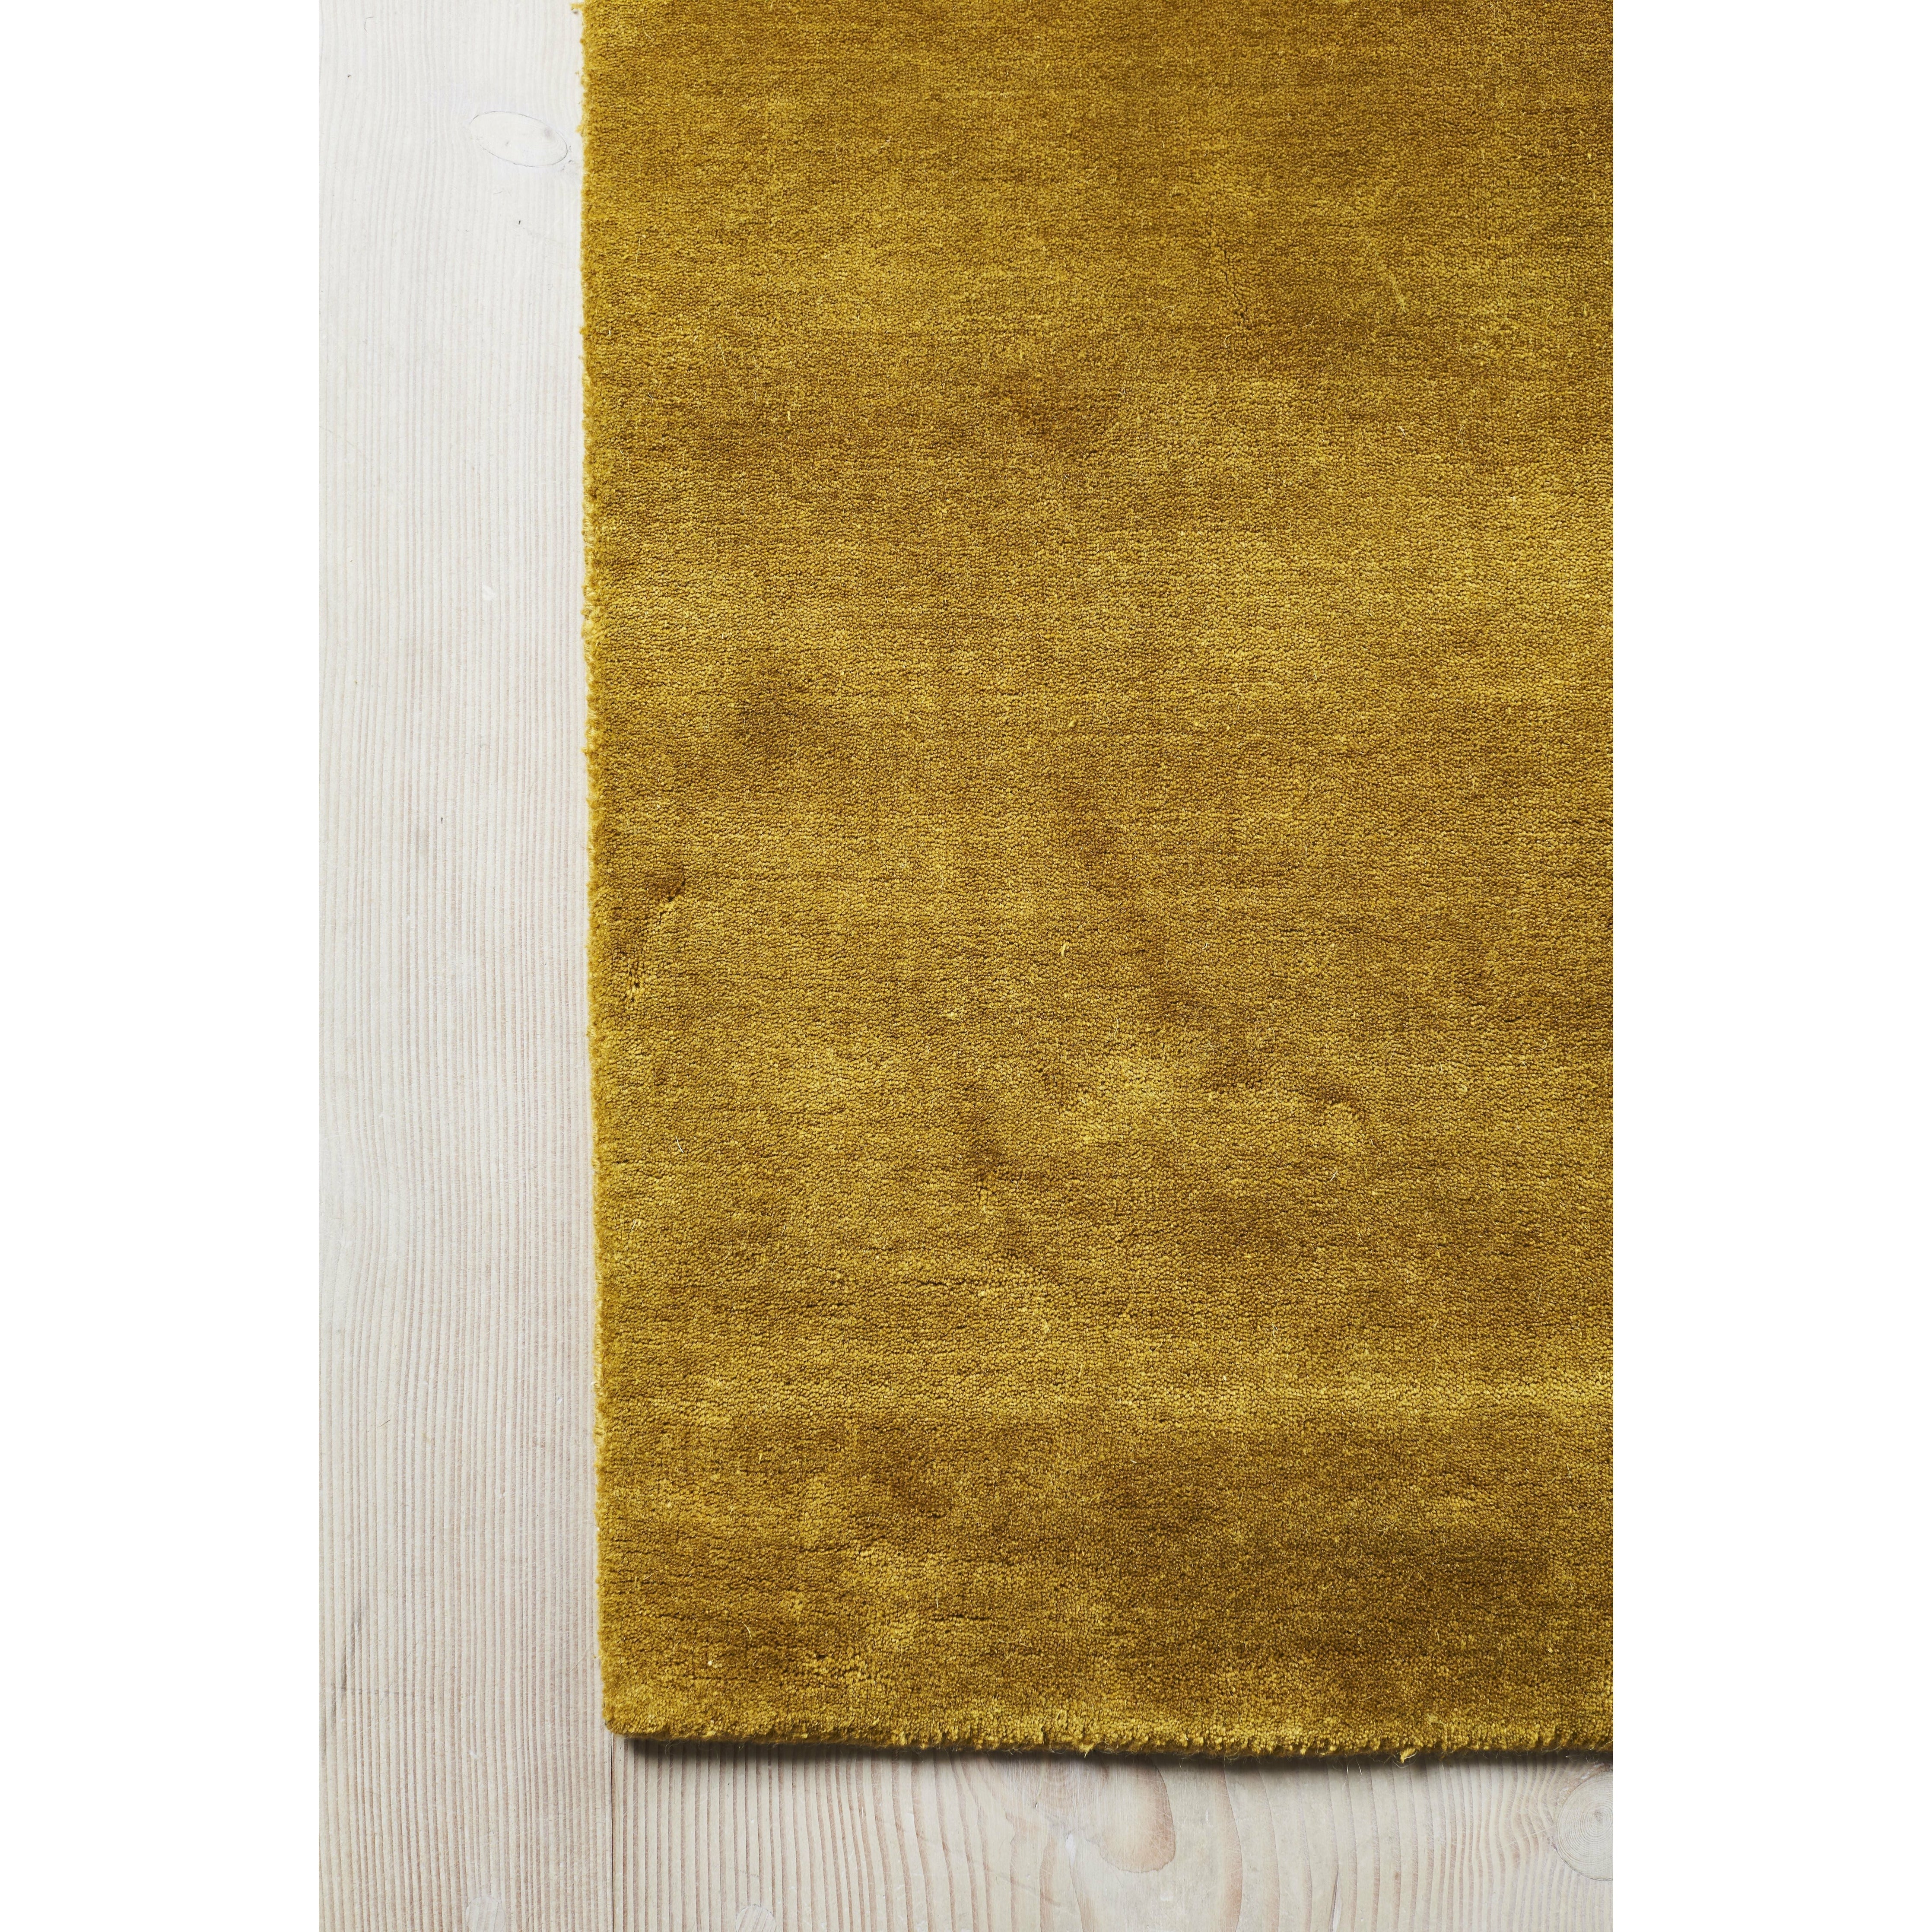 Massimo Earth Bambus Teppich Chinesisch Gelb, 140x200 cm